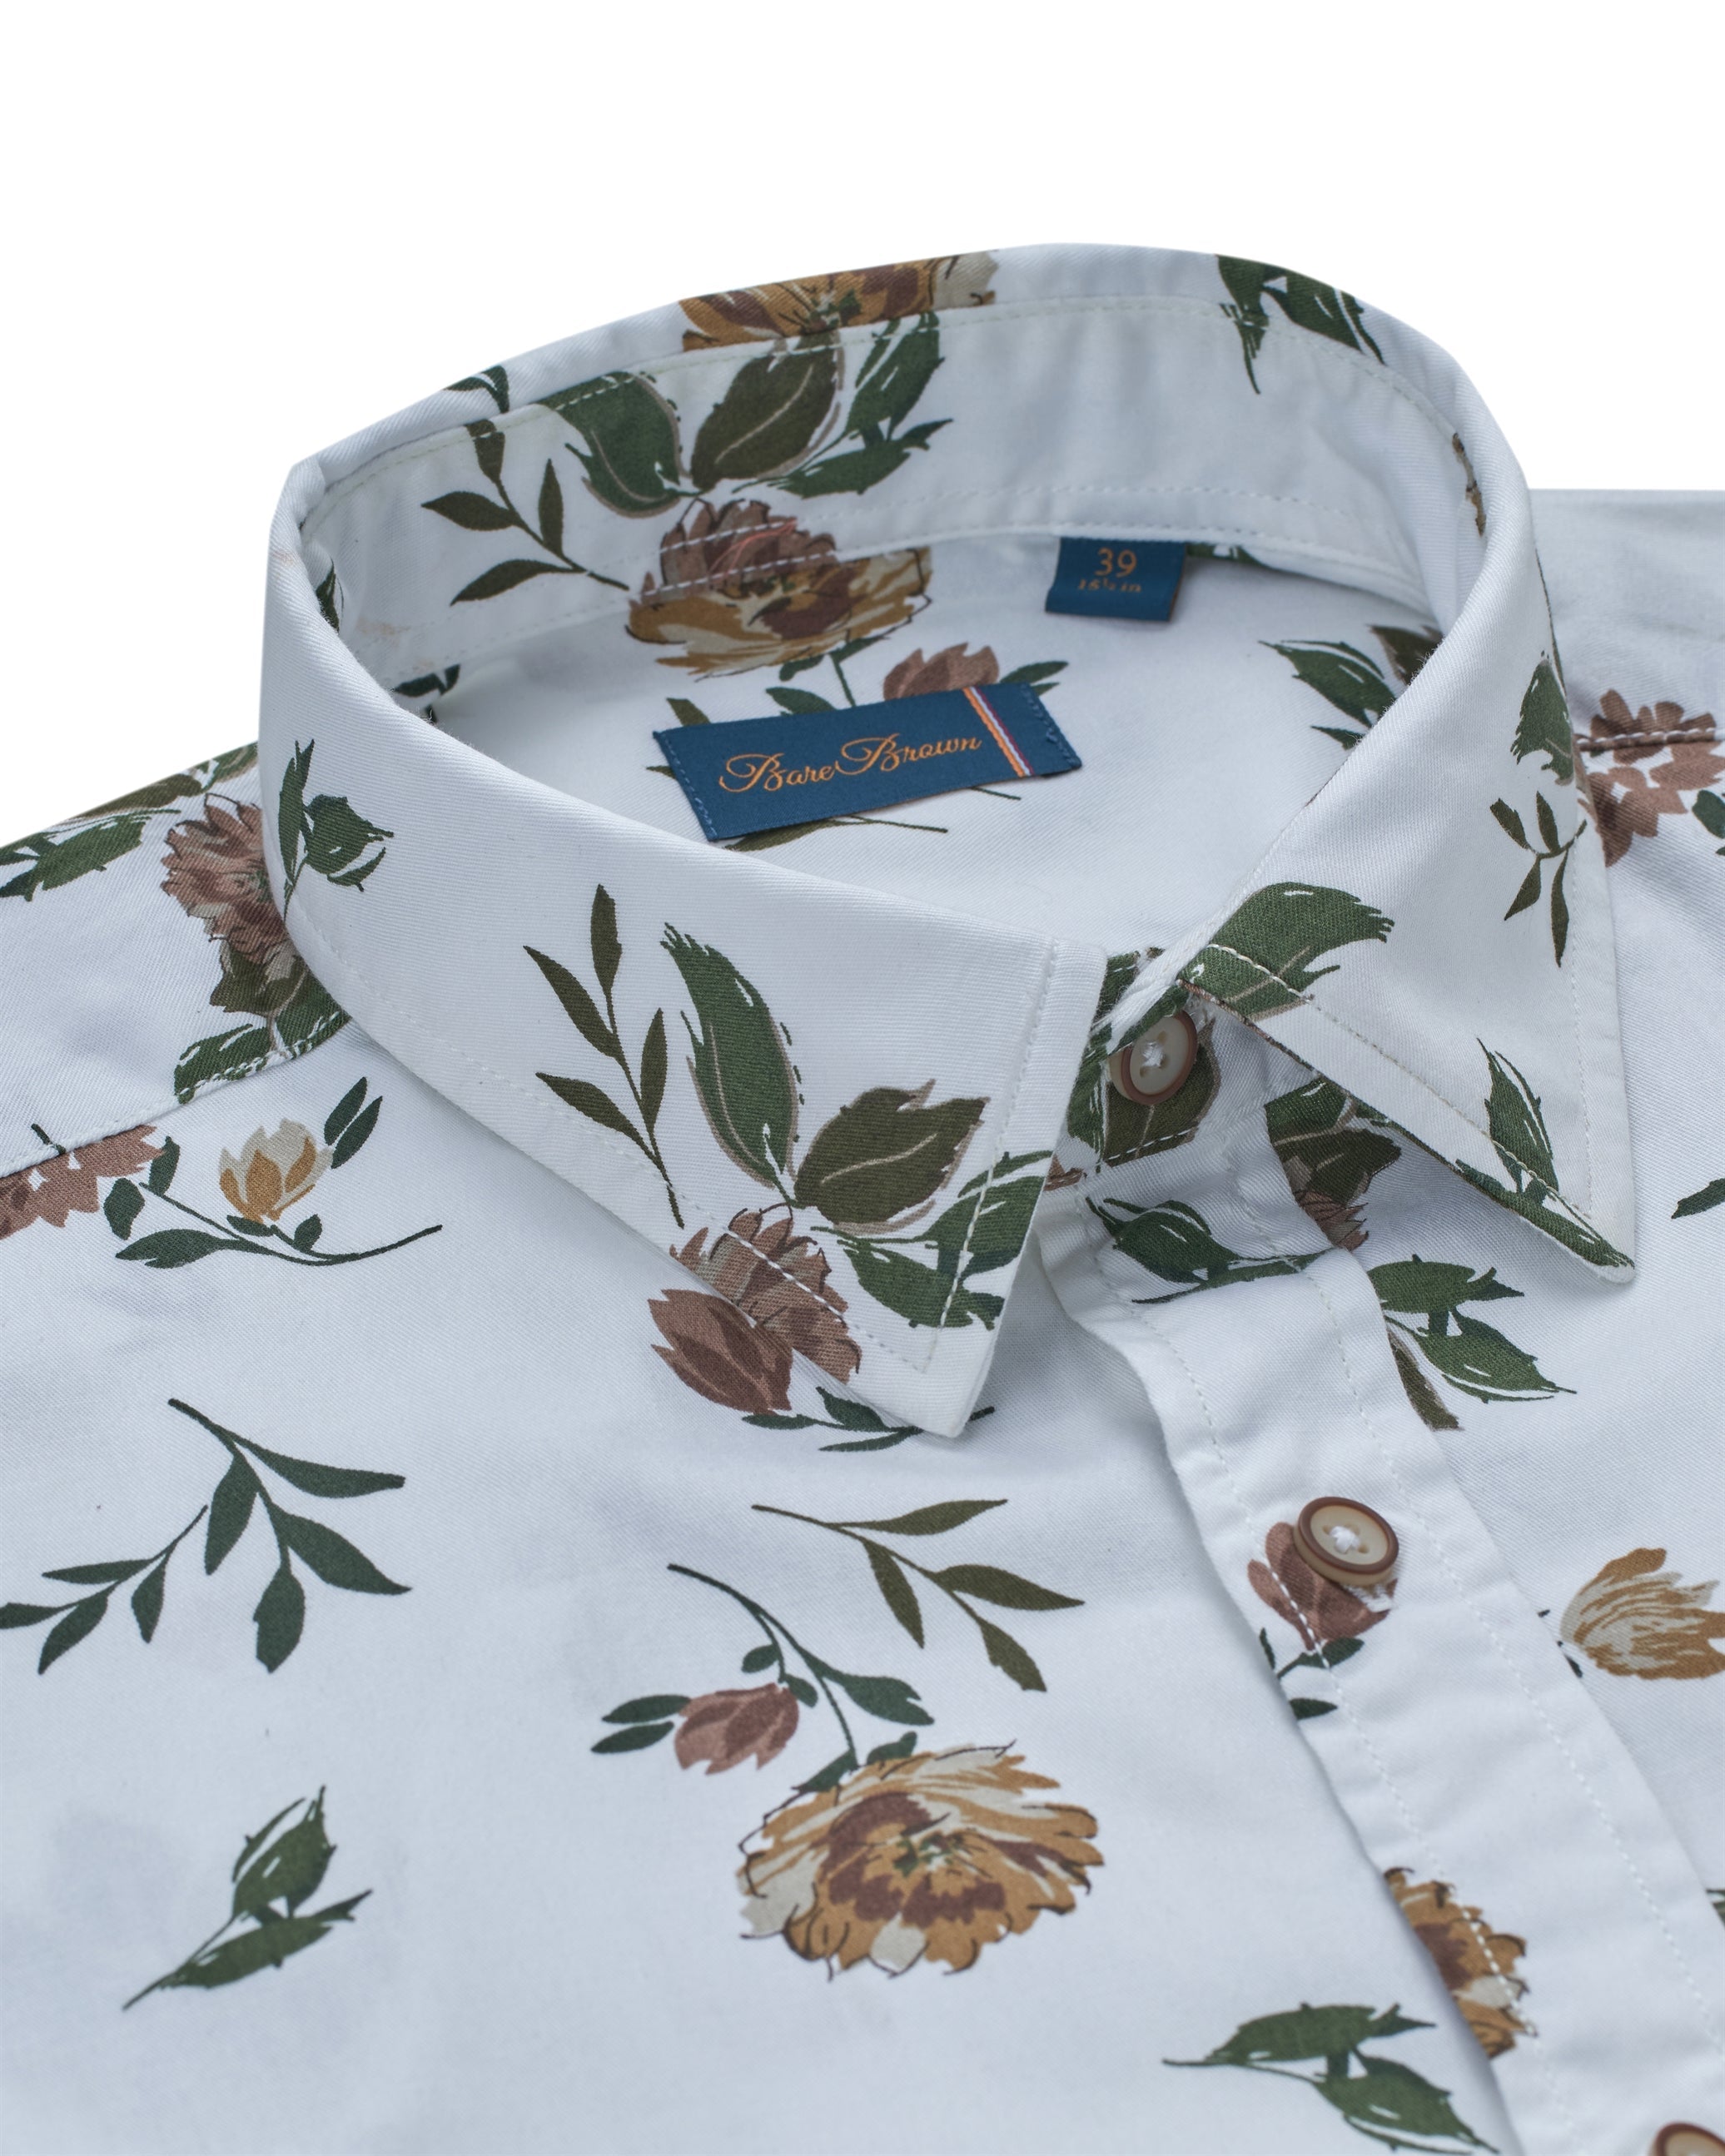 Bare Brown - Floral Print Full Sleeve Shirt, Slim Fit